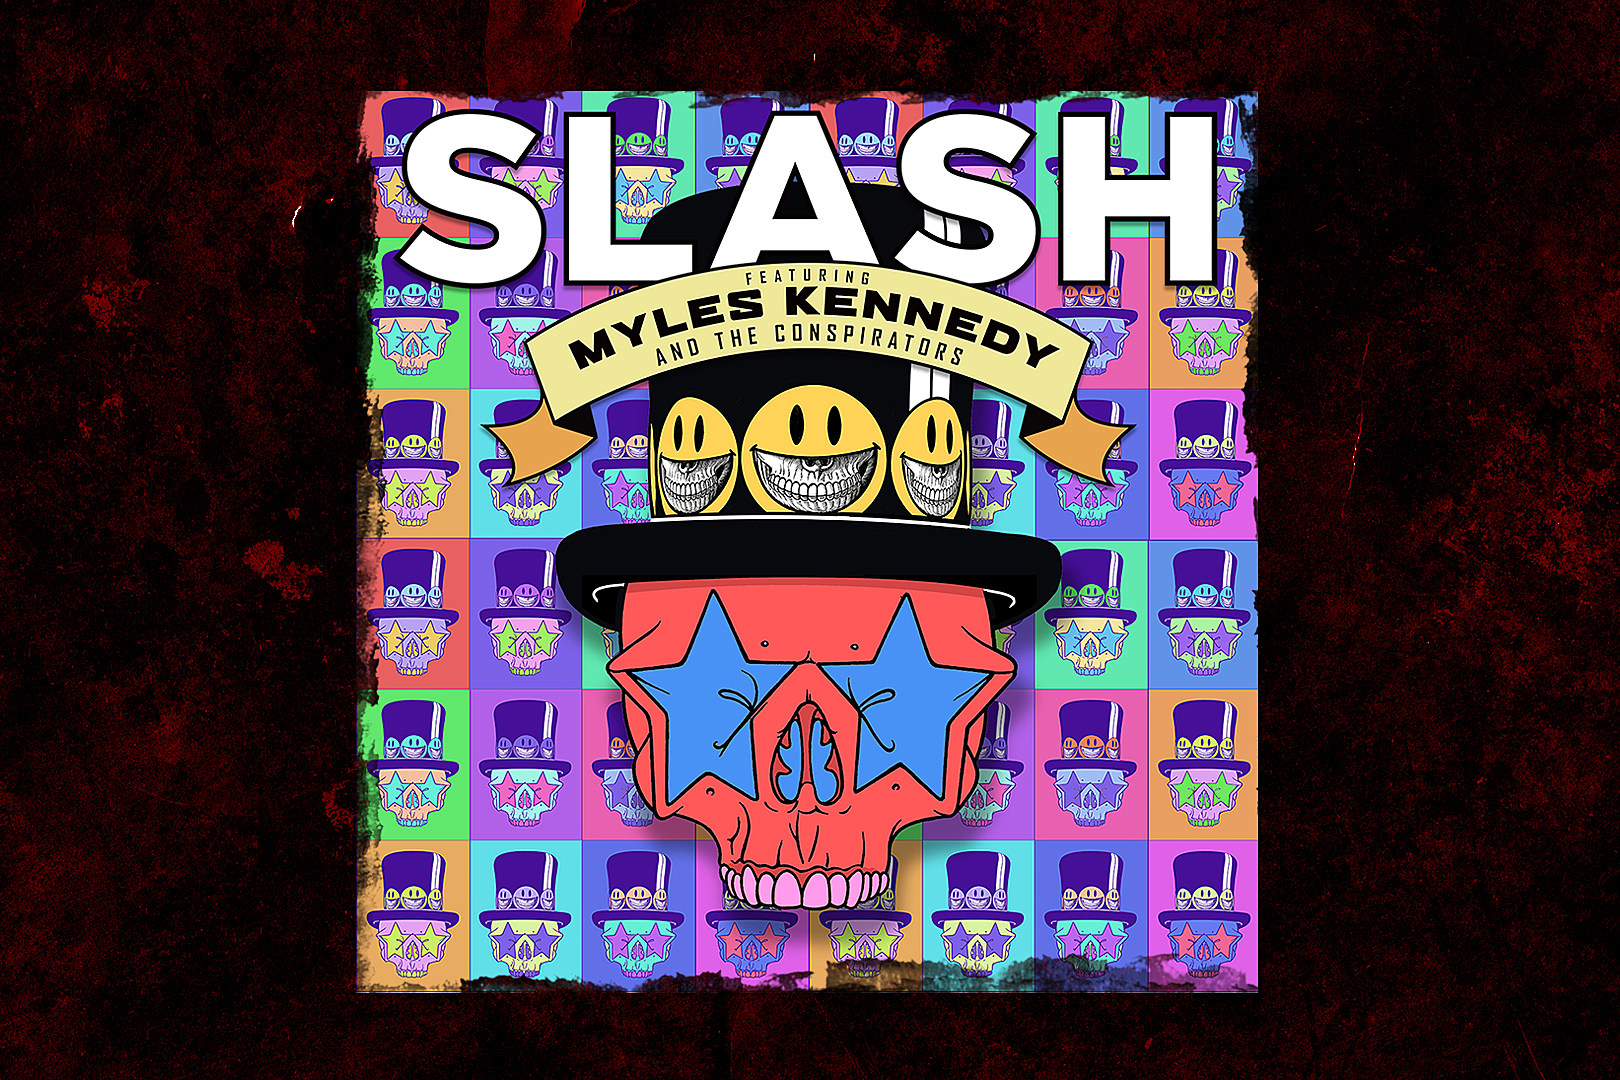 Living The Dream Tour (Live) - Album by Slash